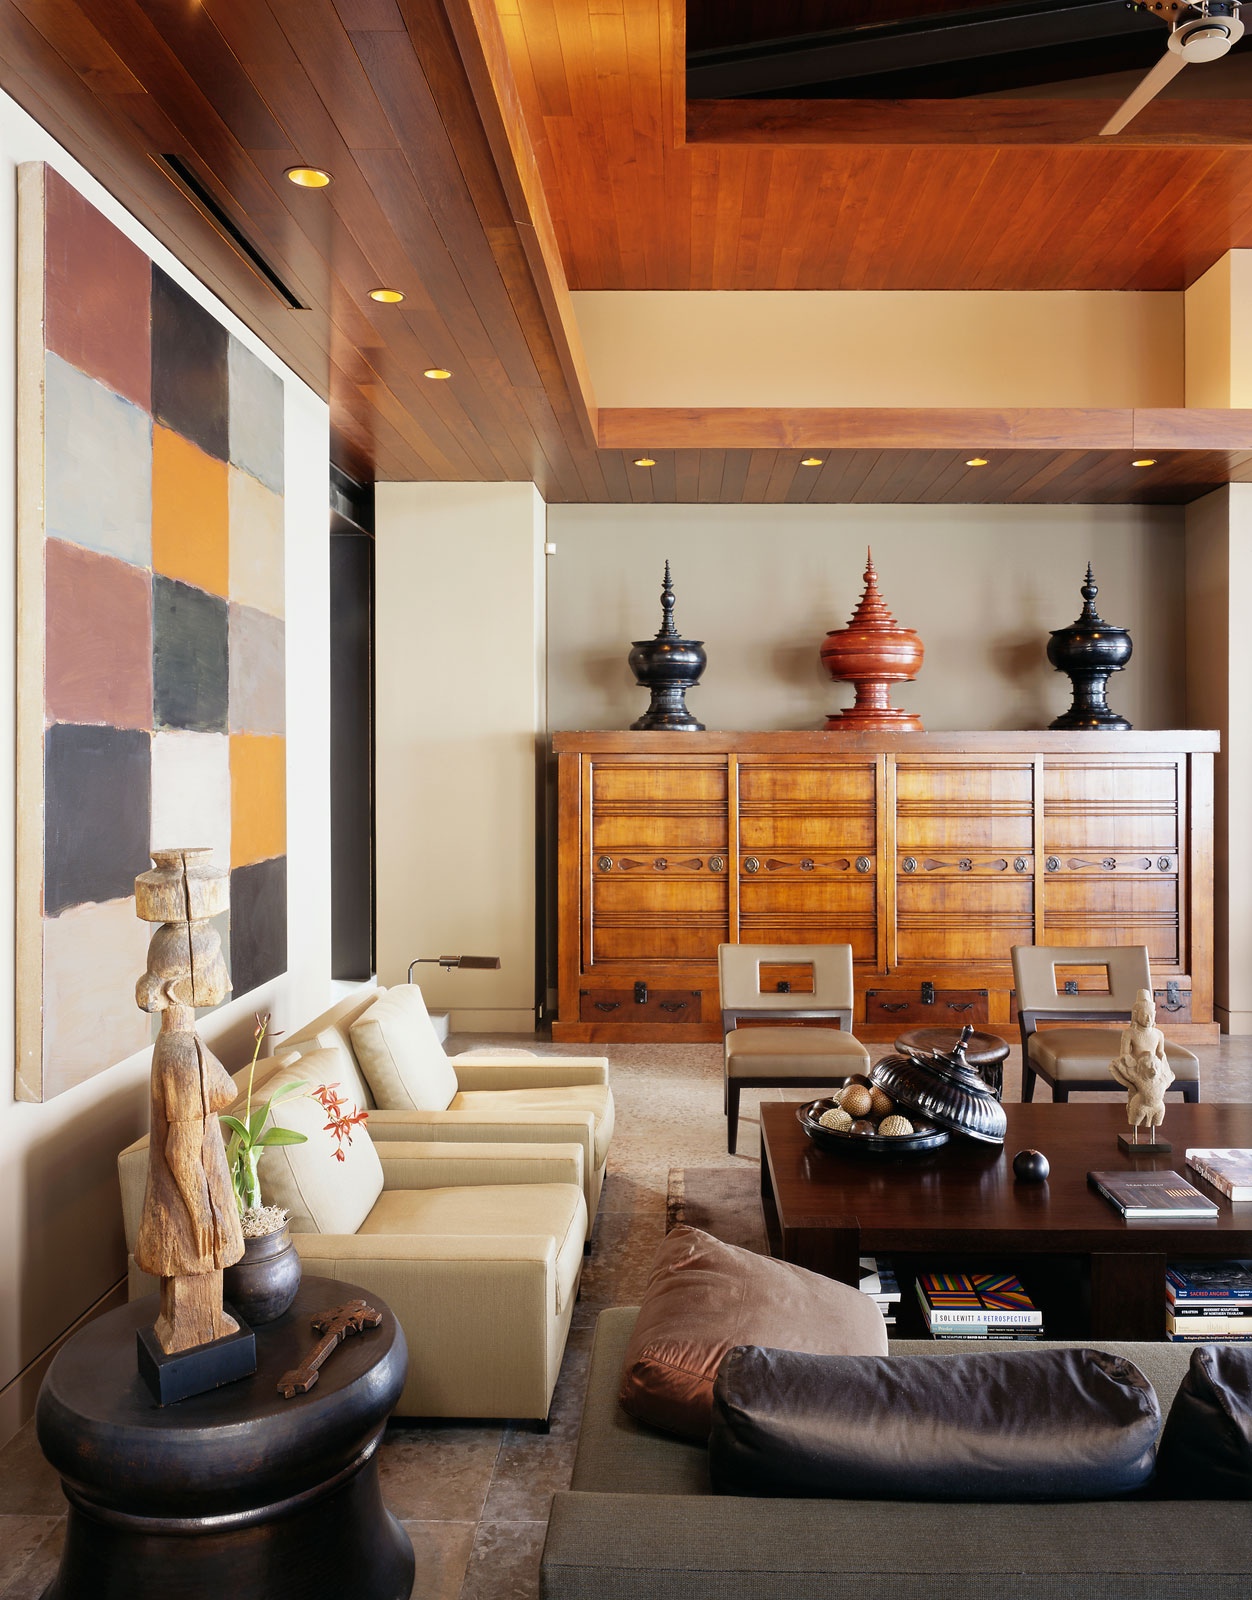 Balinese style interior | Interior Design Ideas